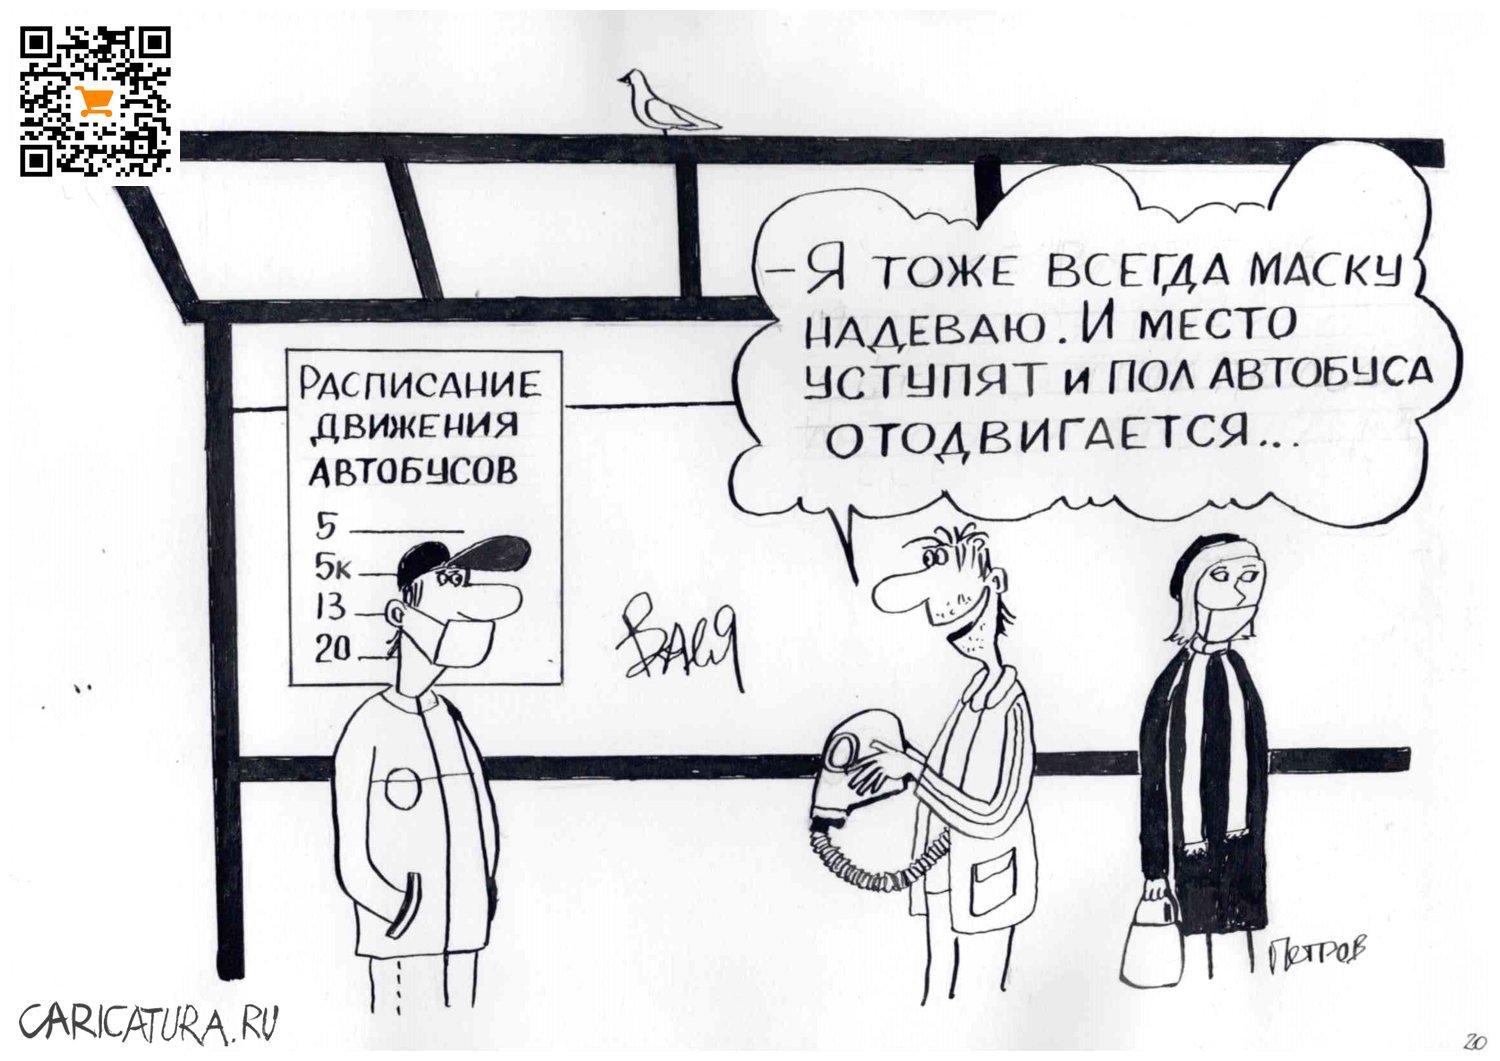 Карикатура "Лучшая маска от коронавируса", Александр Петров